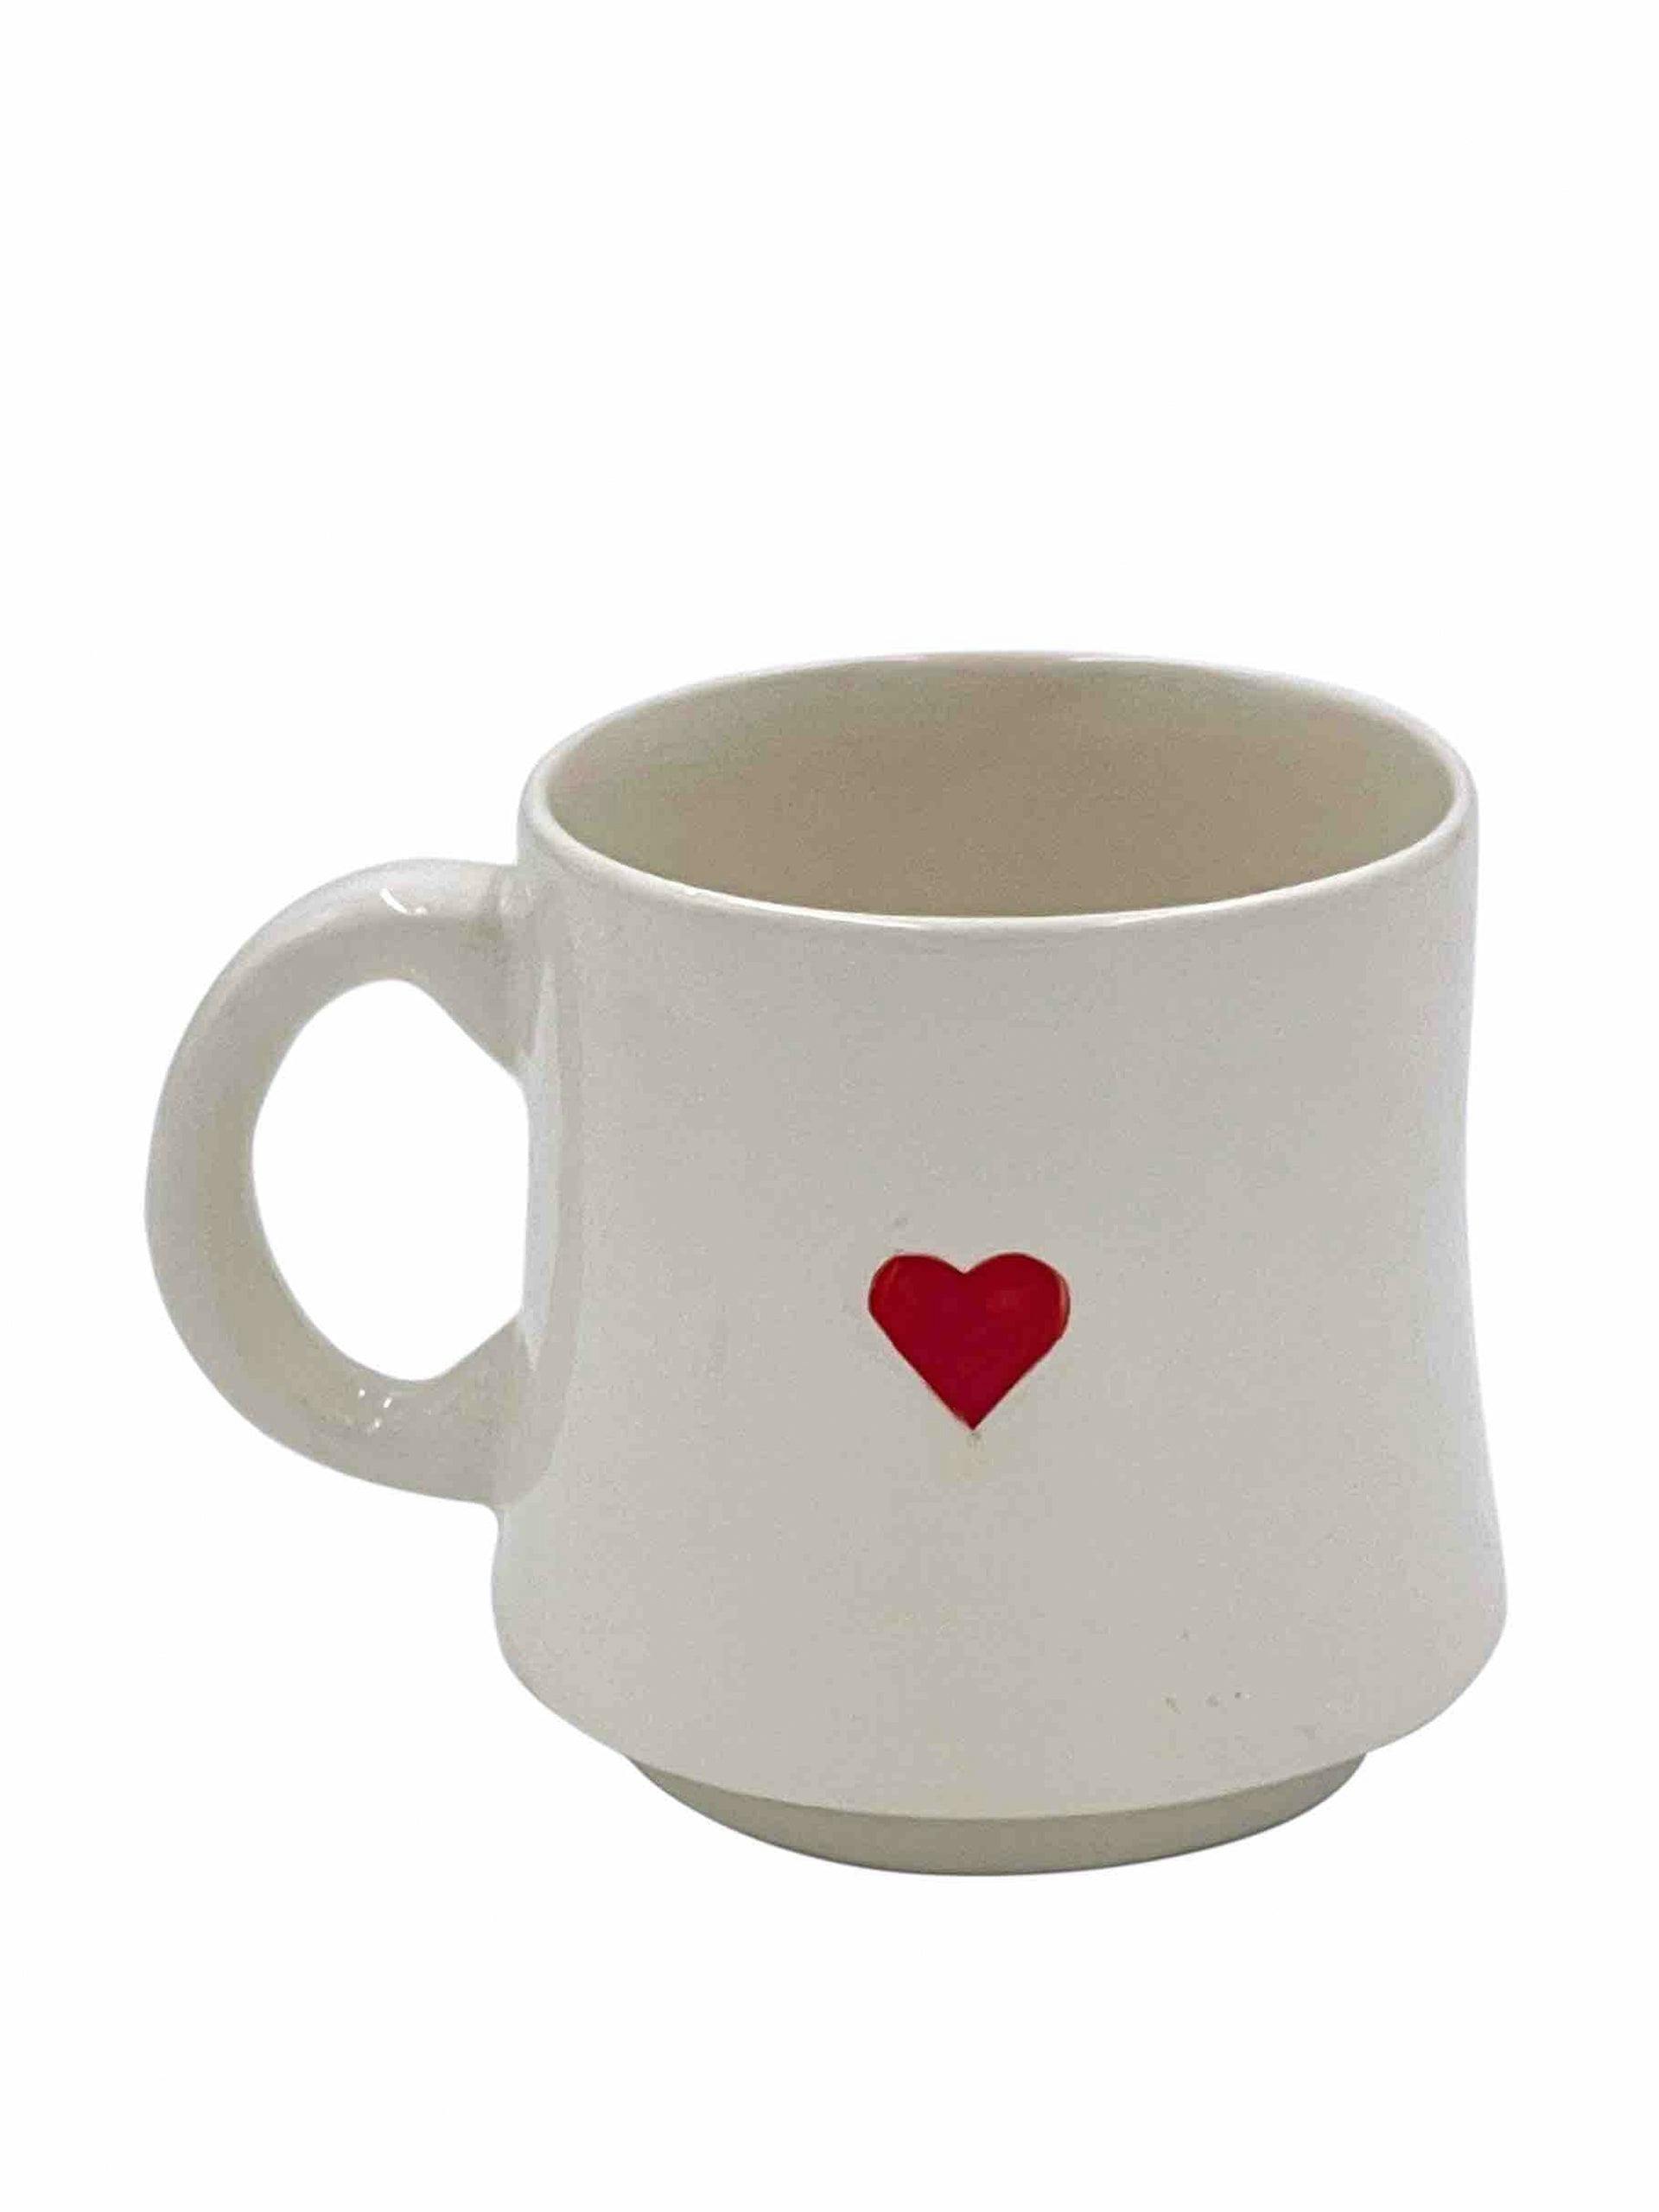 Small love heart mug